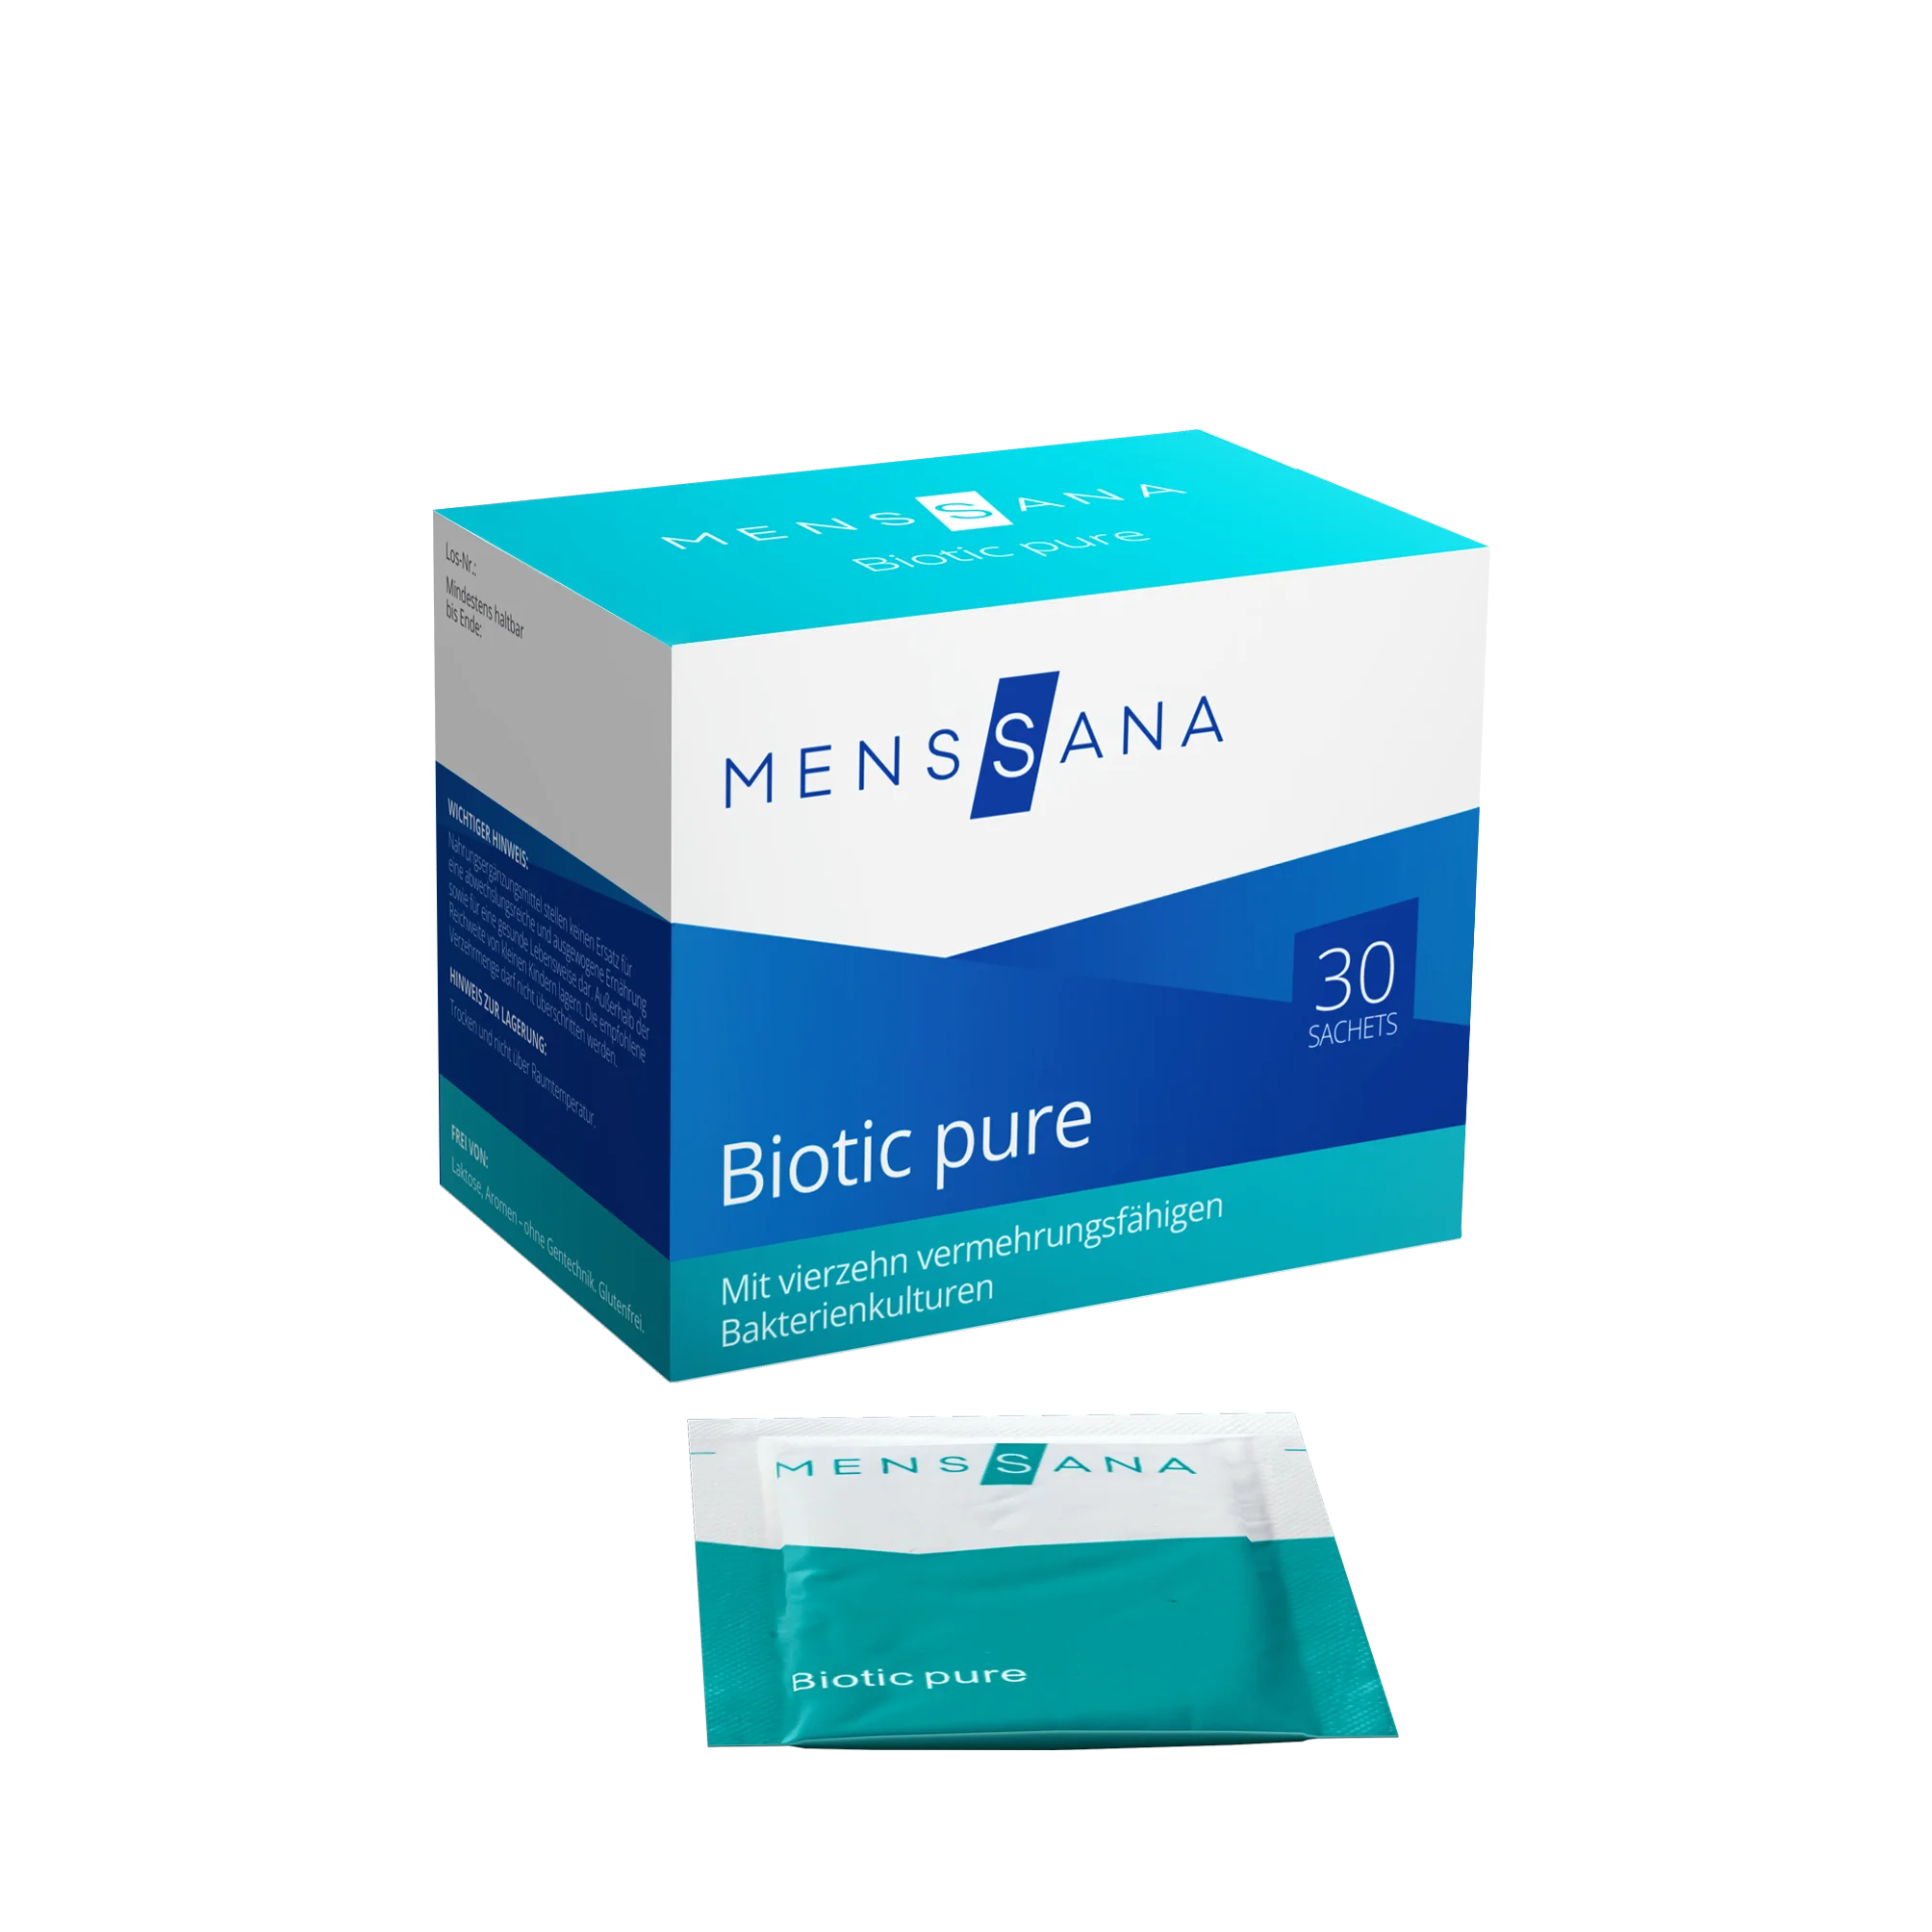 Biotic pure (30 Sachets) Titelbild | MensSana OnlineShop